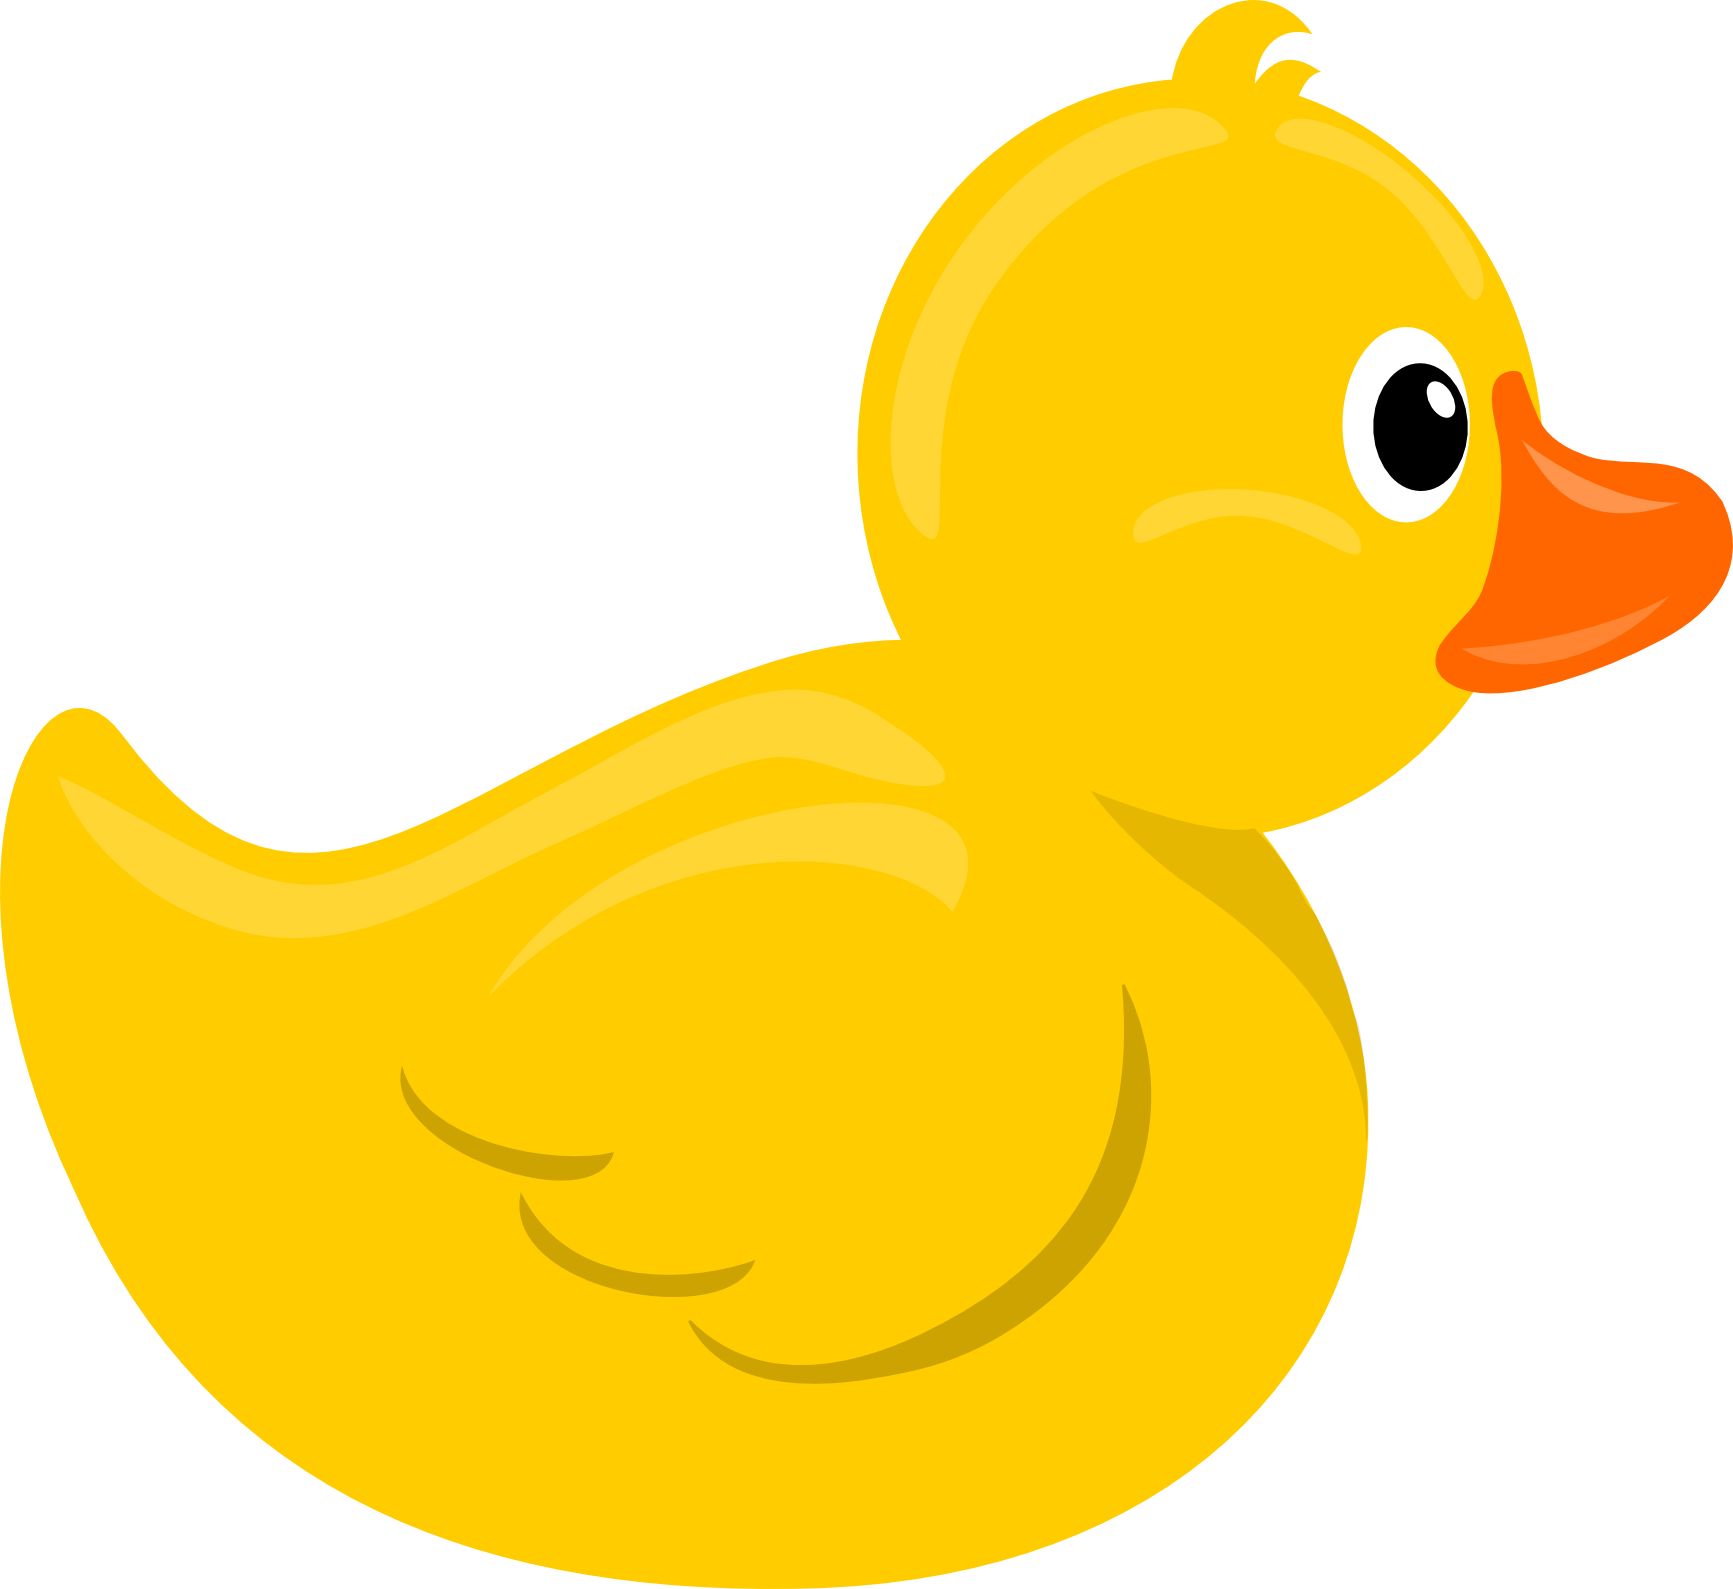 Rubber Duck (1733x1589)